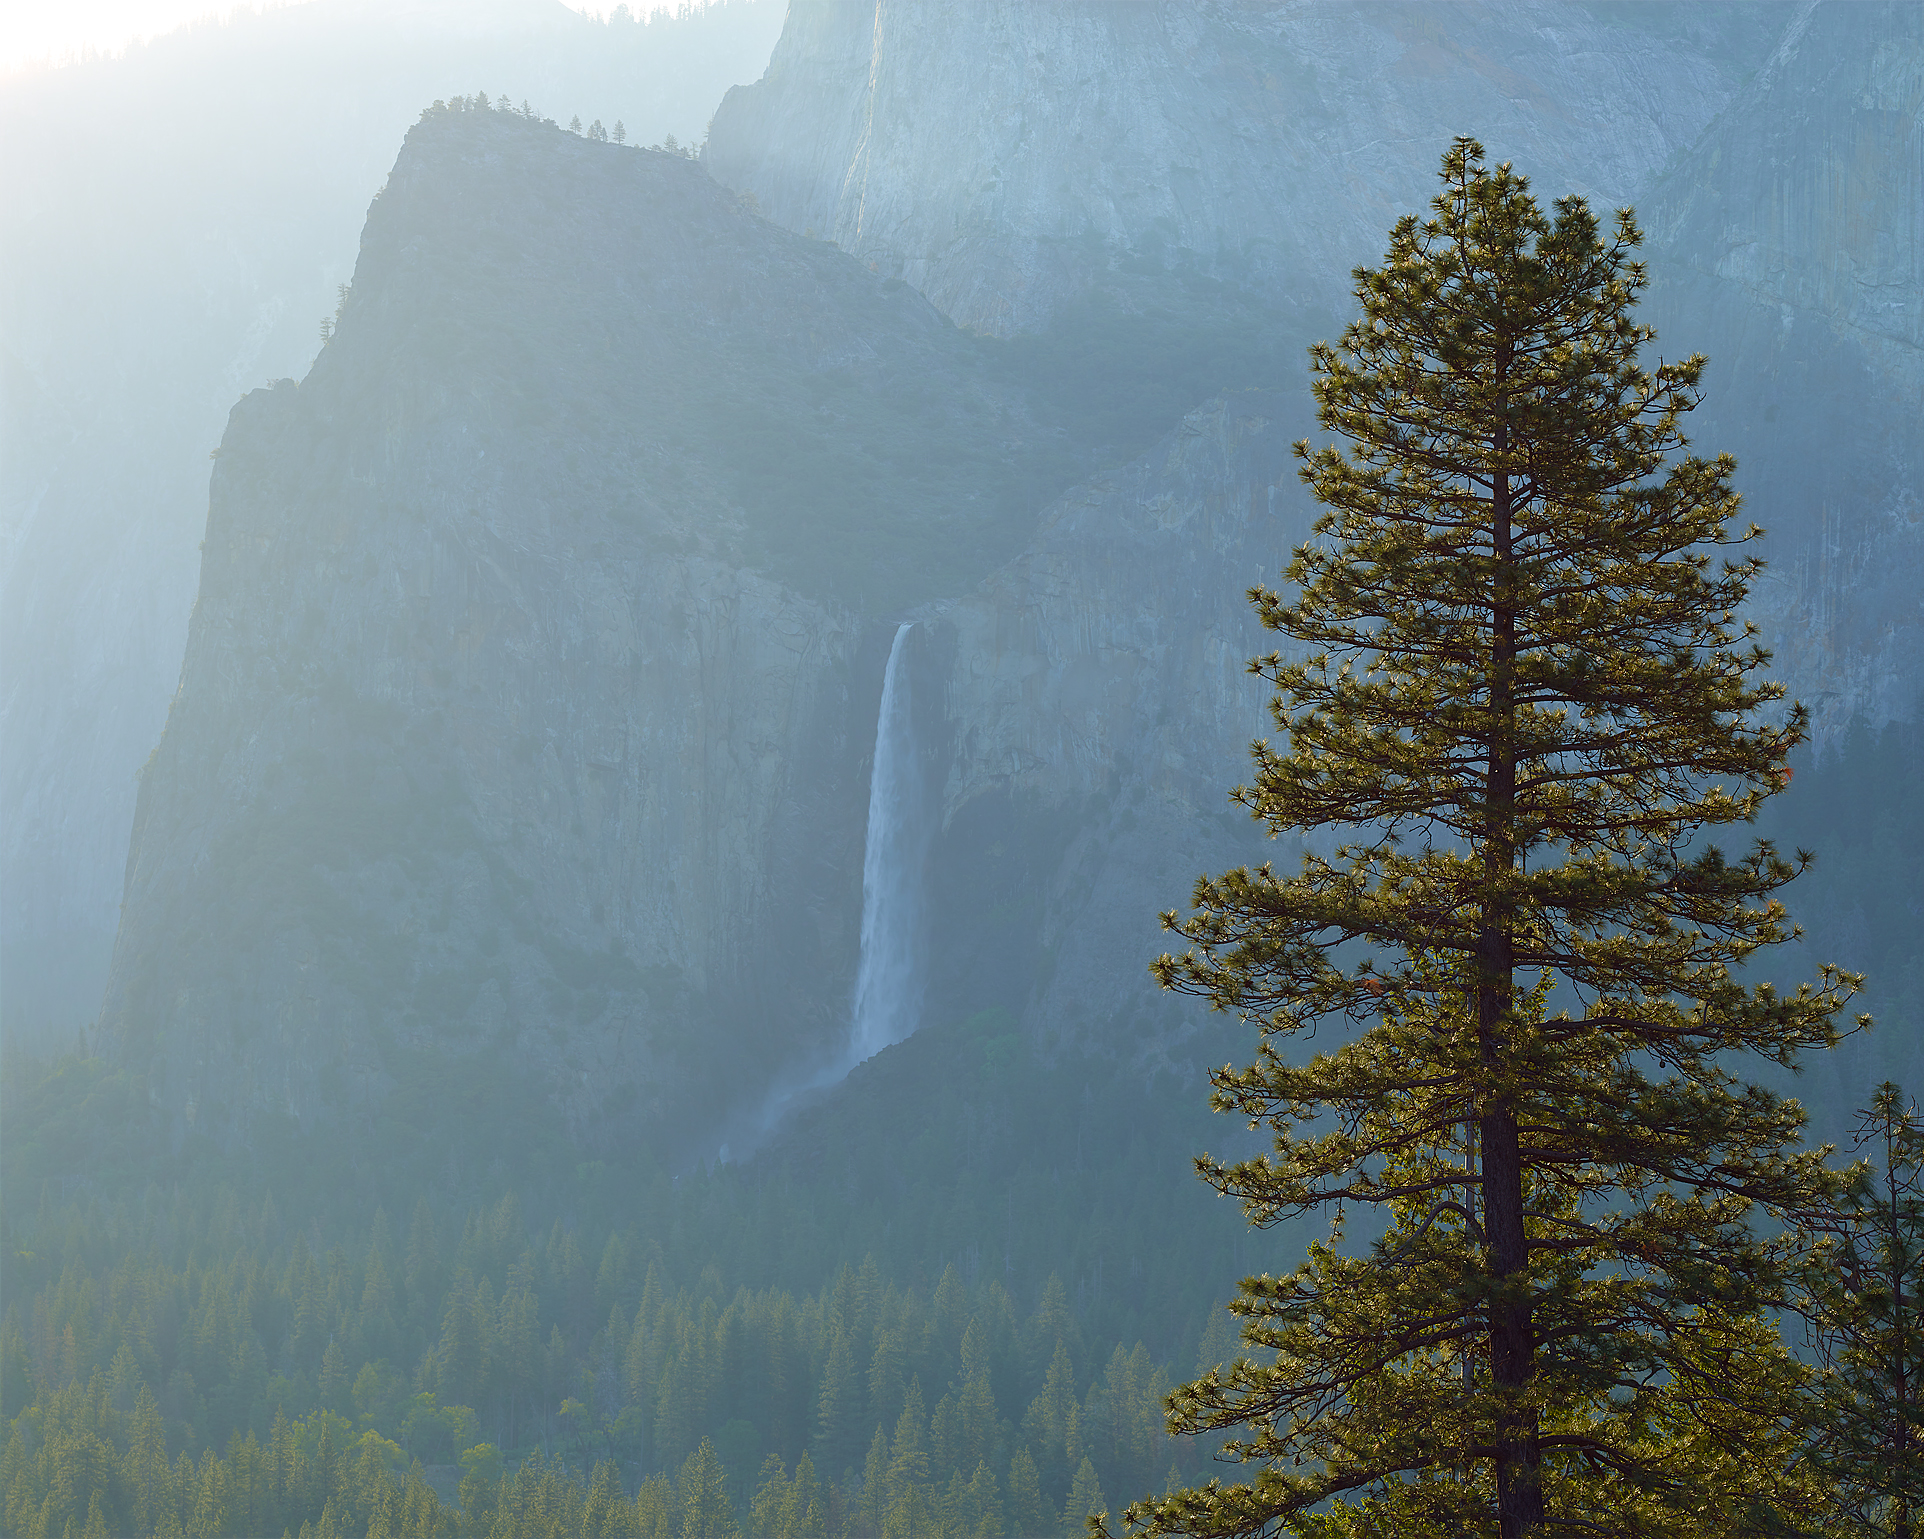 Yosemite Rising